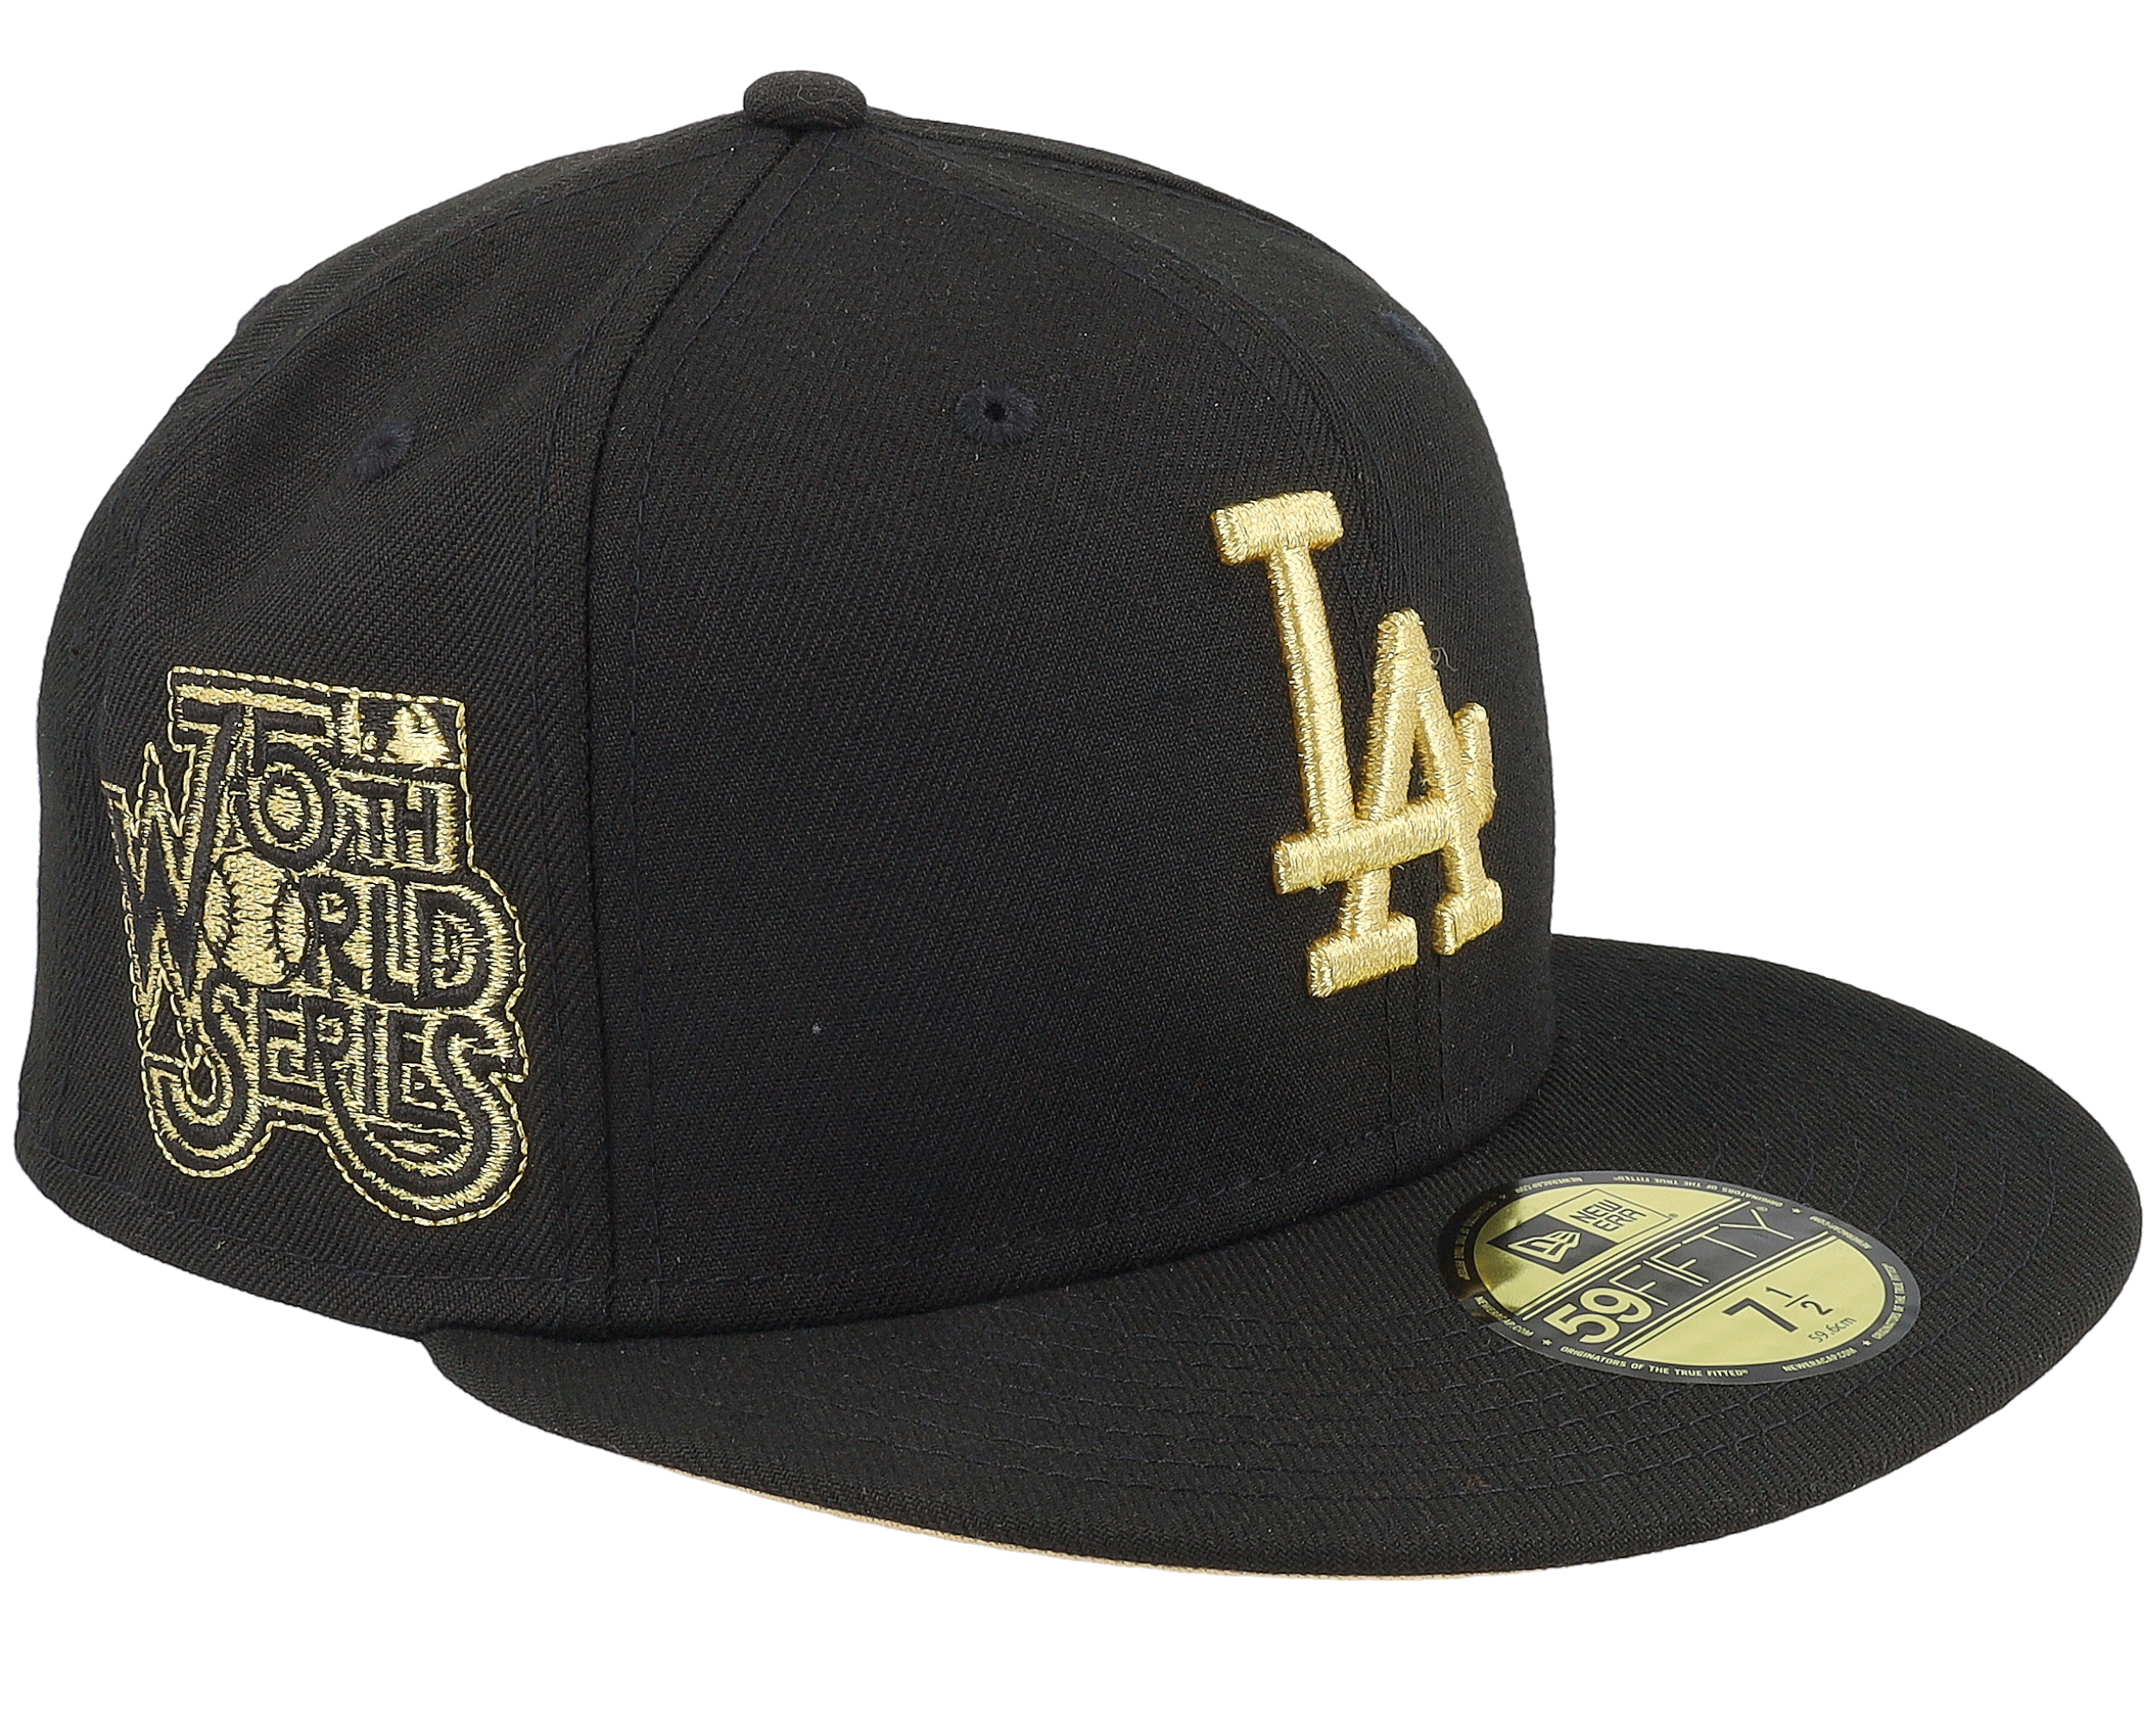 Gorra New Era Los Angeles Dodgers Color Negro